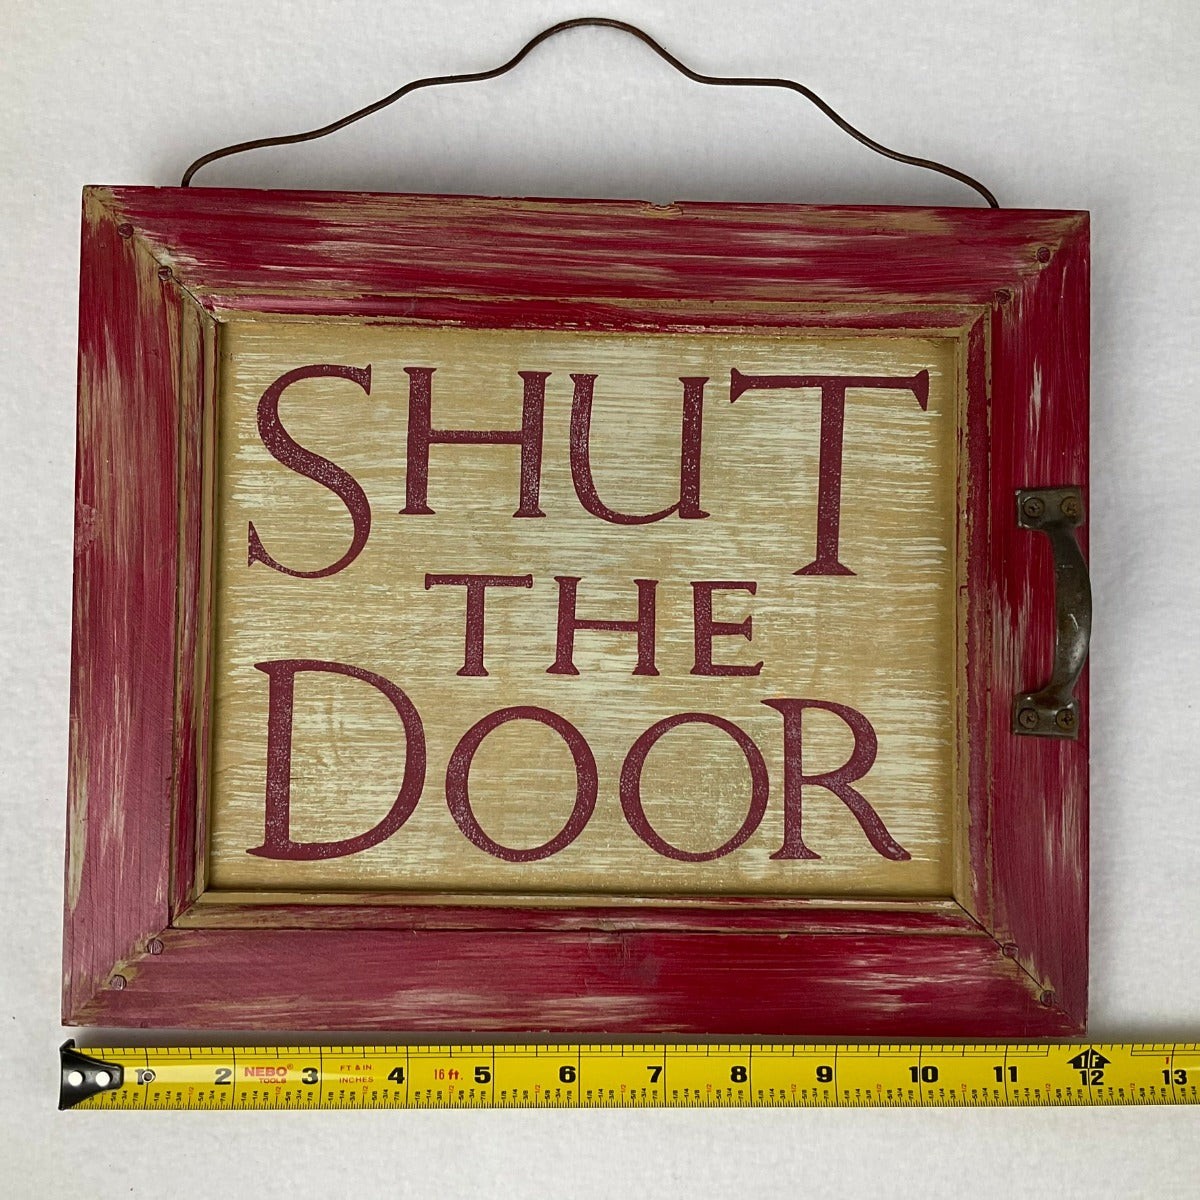 SHUT THE DOOR Wooden Sign with Vintage Look - 12 inches Wide